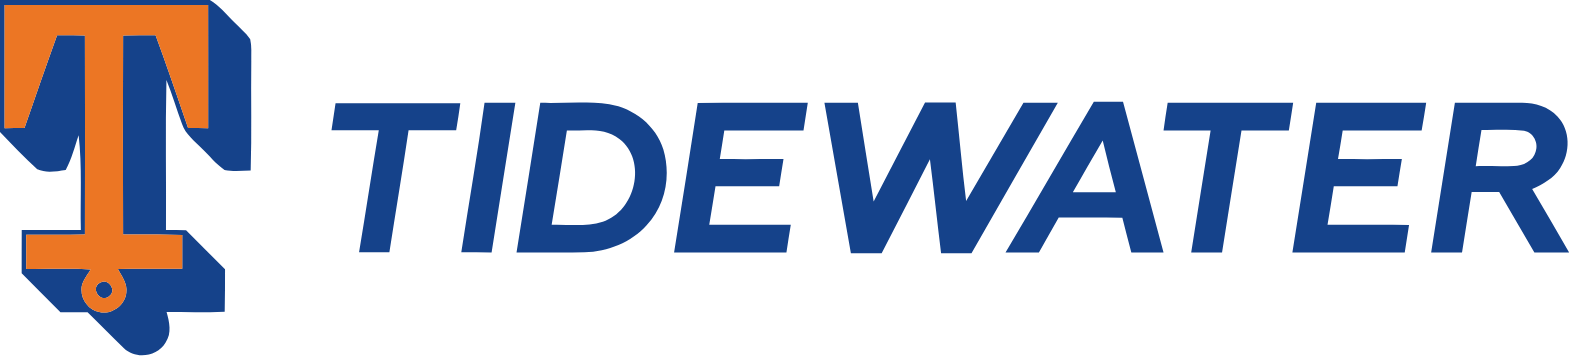 Tidewater logo large (transparent PNG)